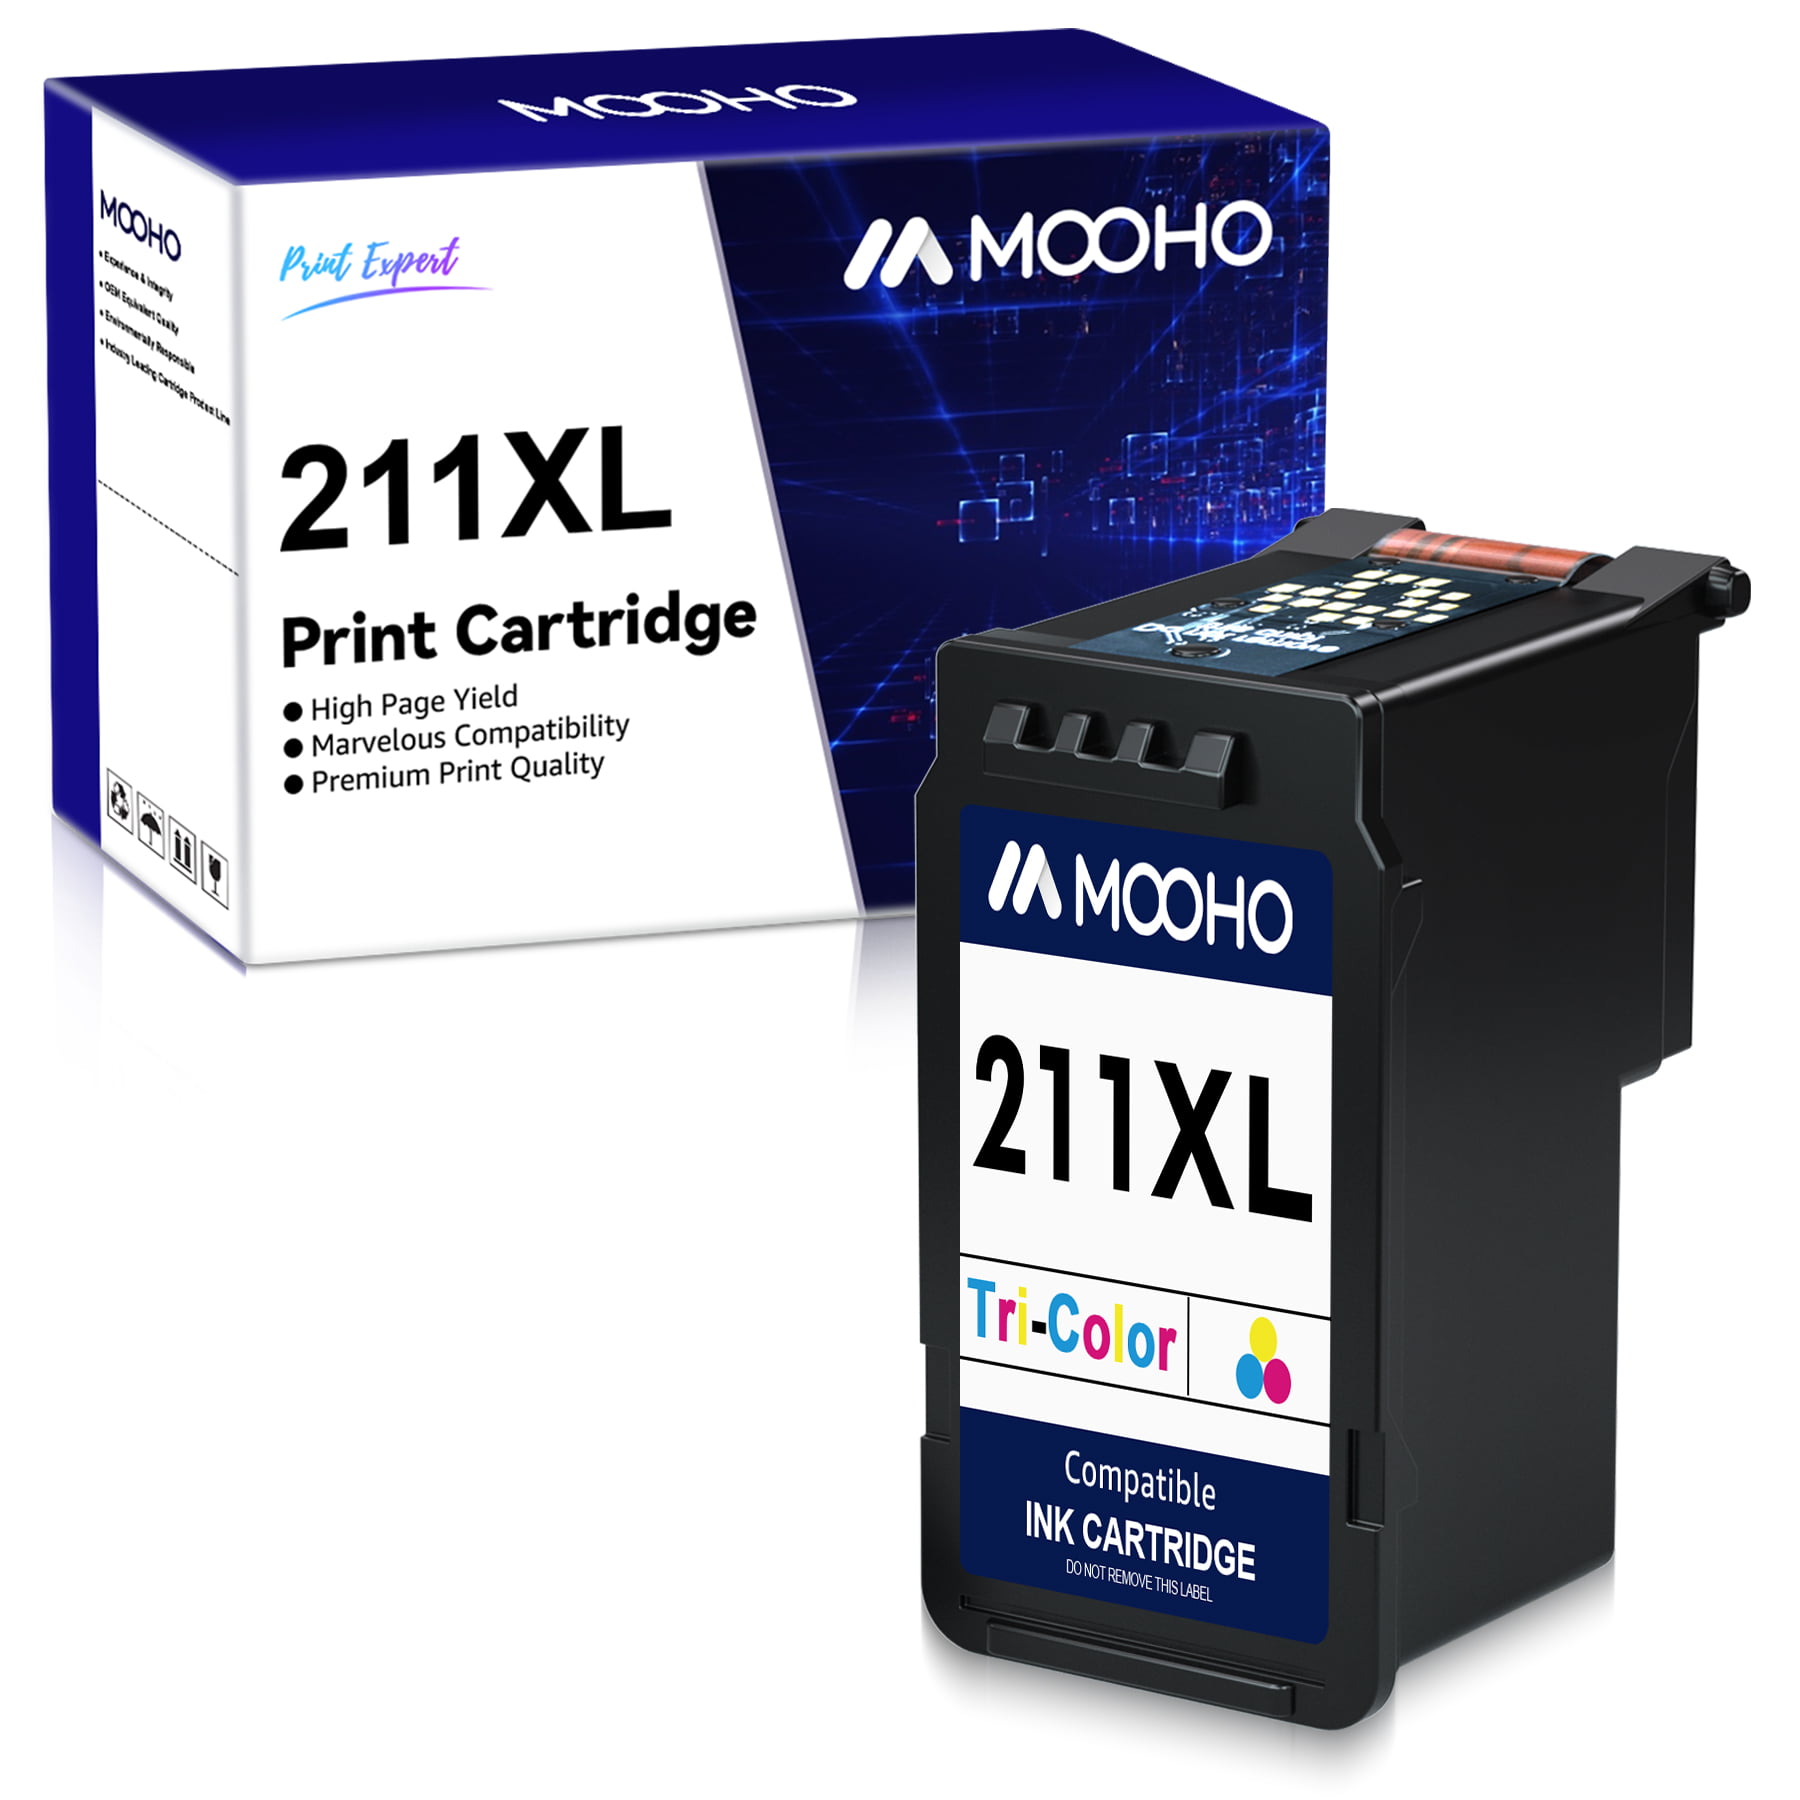 canon mp490 printer cartridges